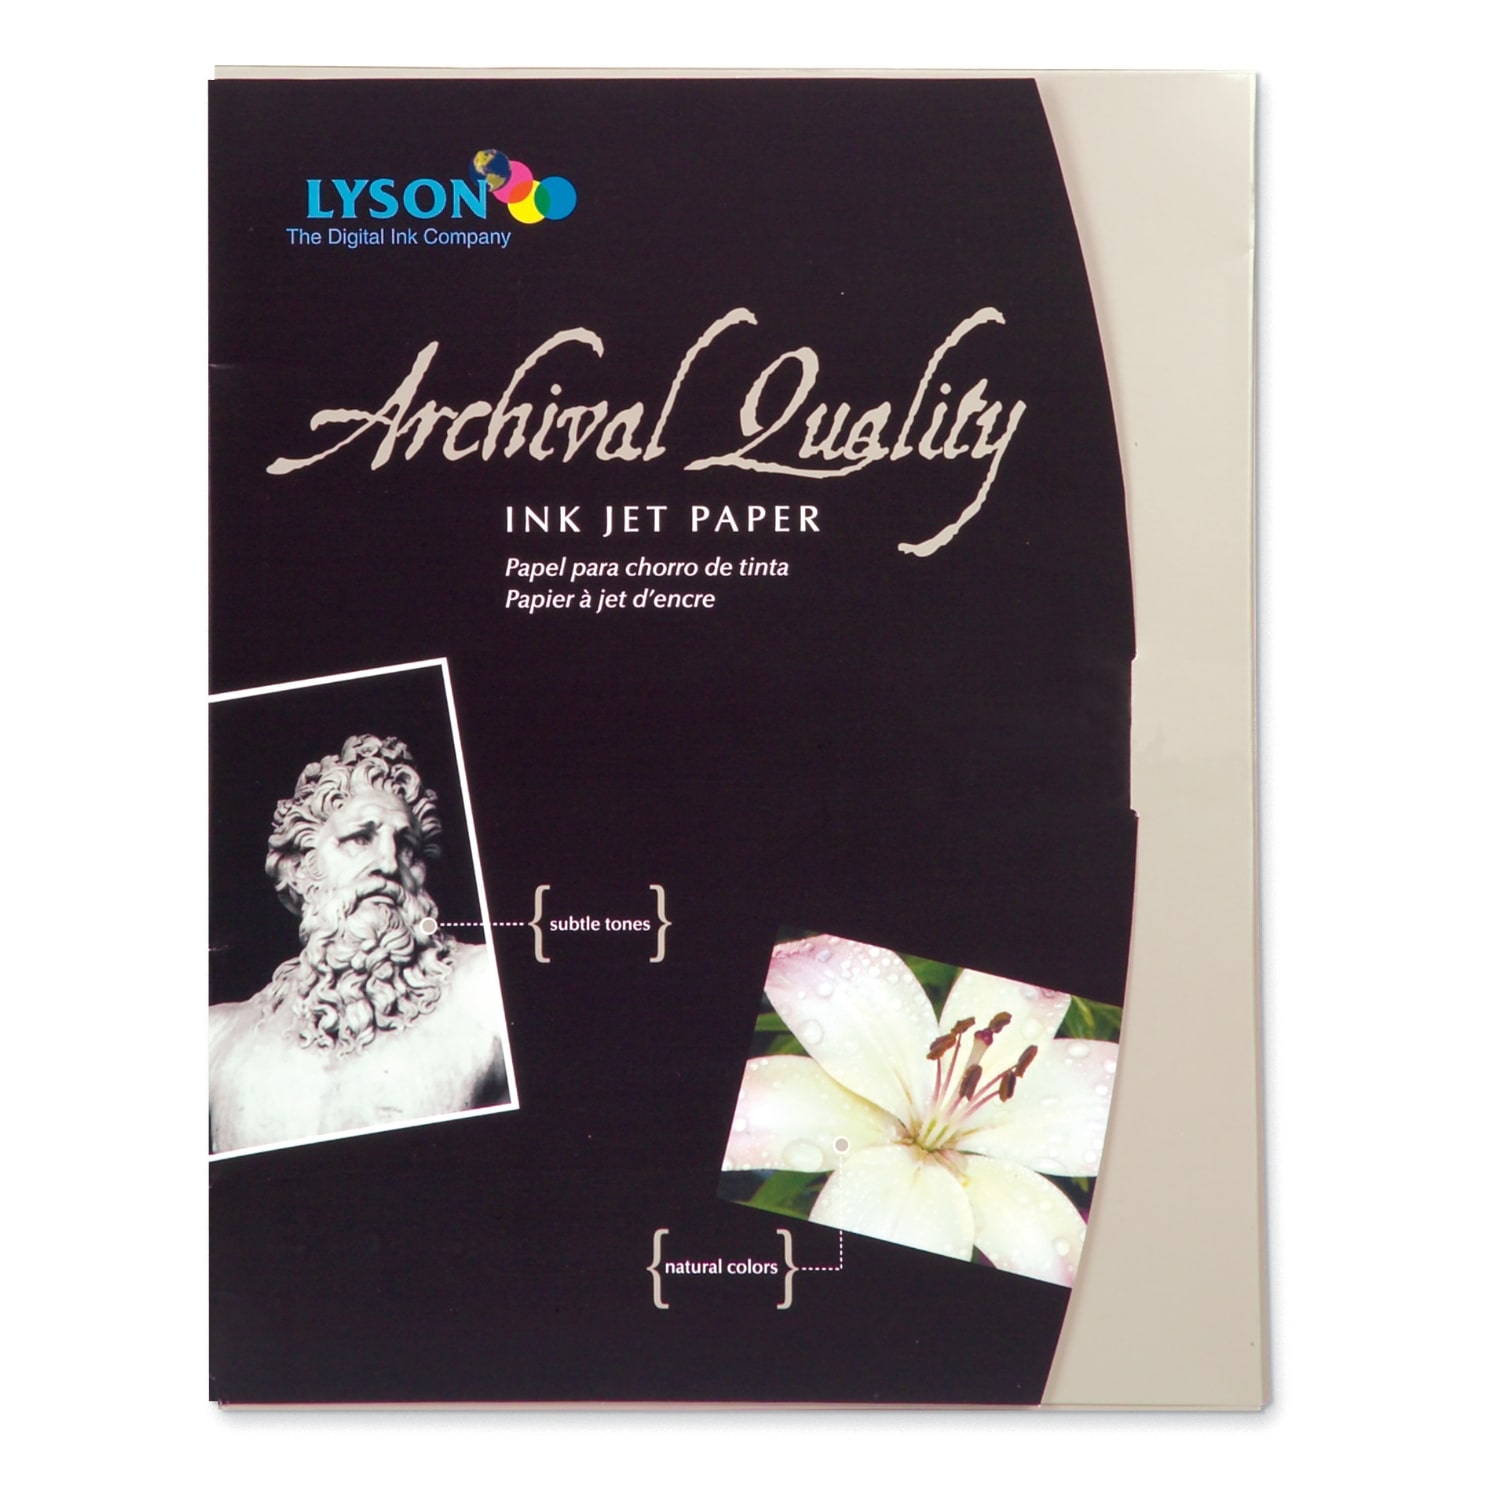 Premium Luster Digital Inkjet Paper Archival & Library Solutions